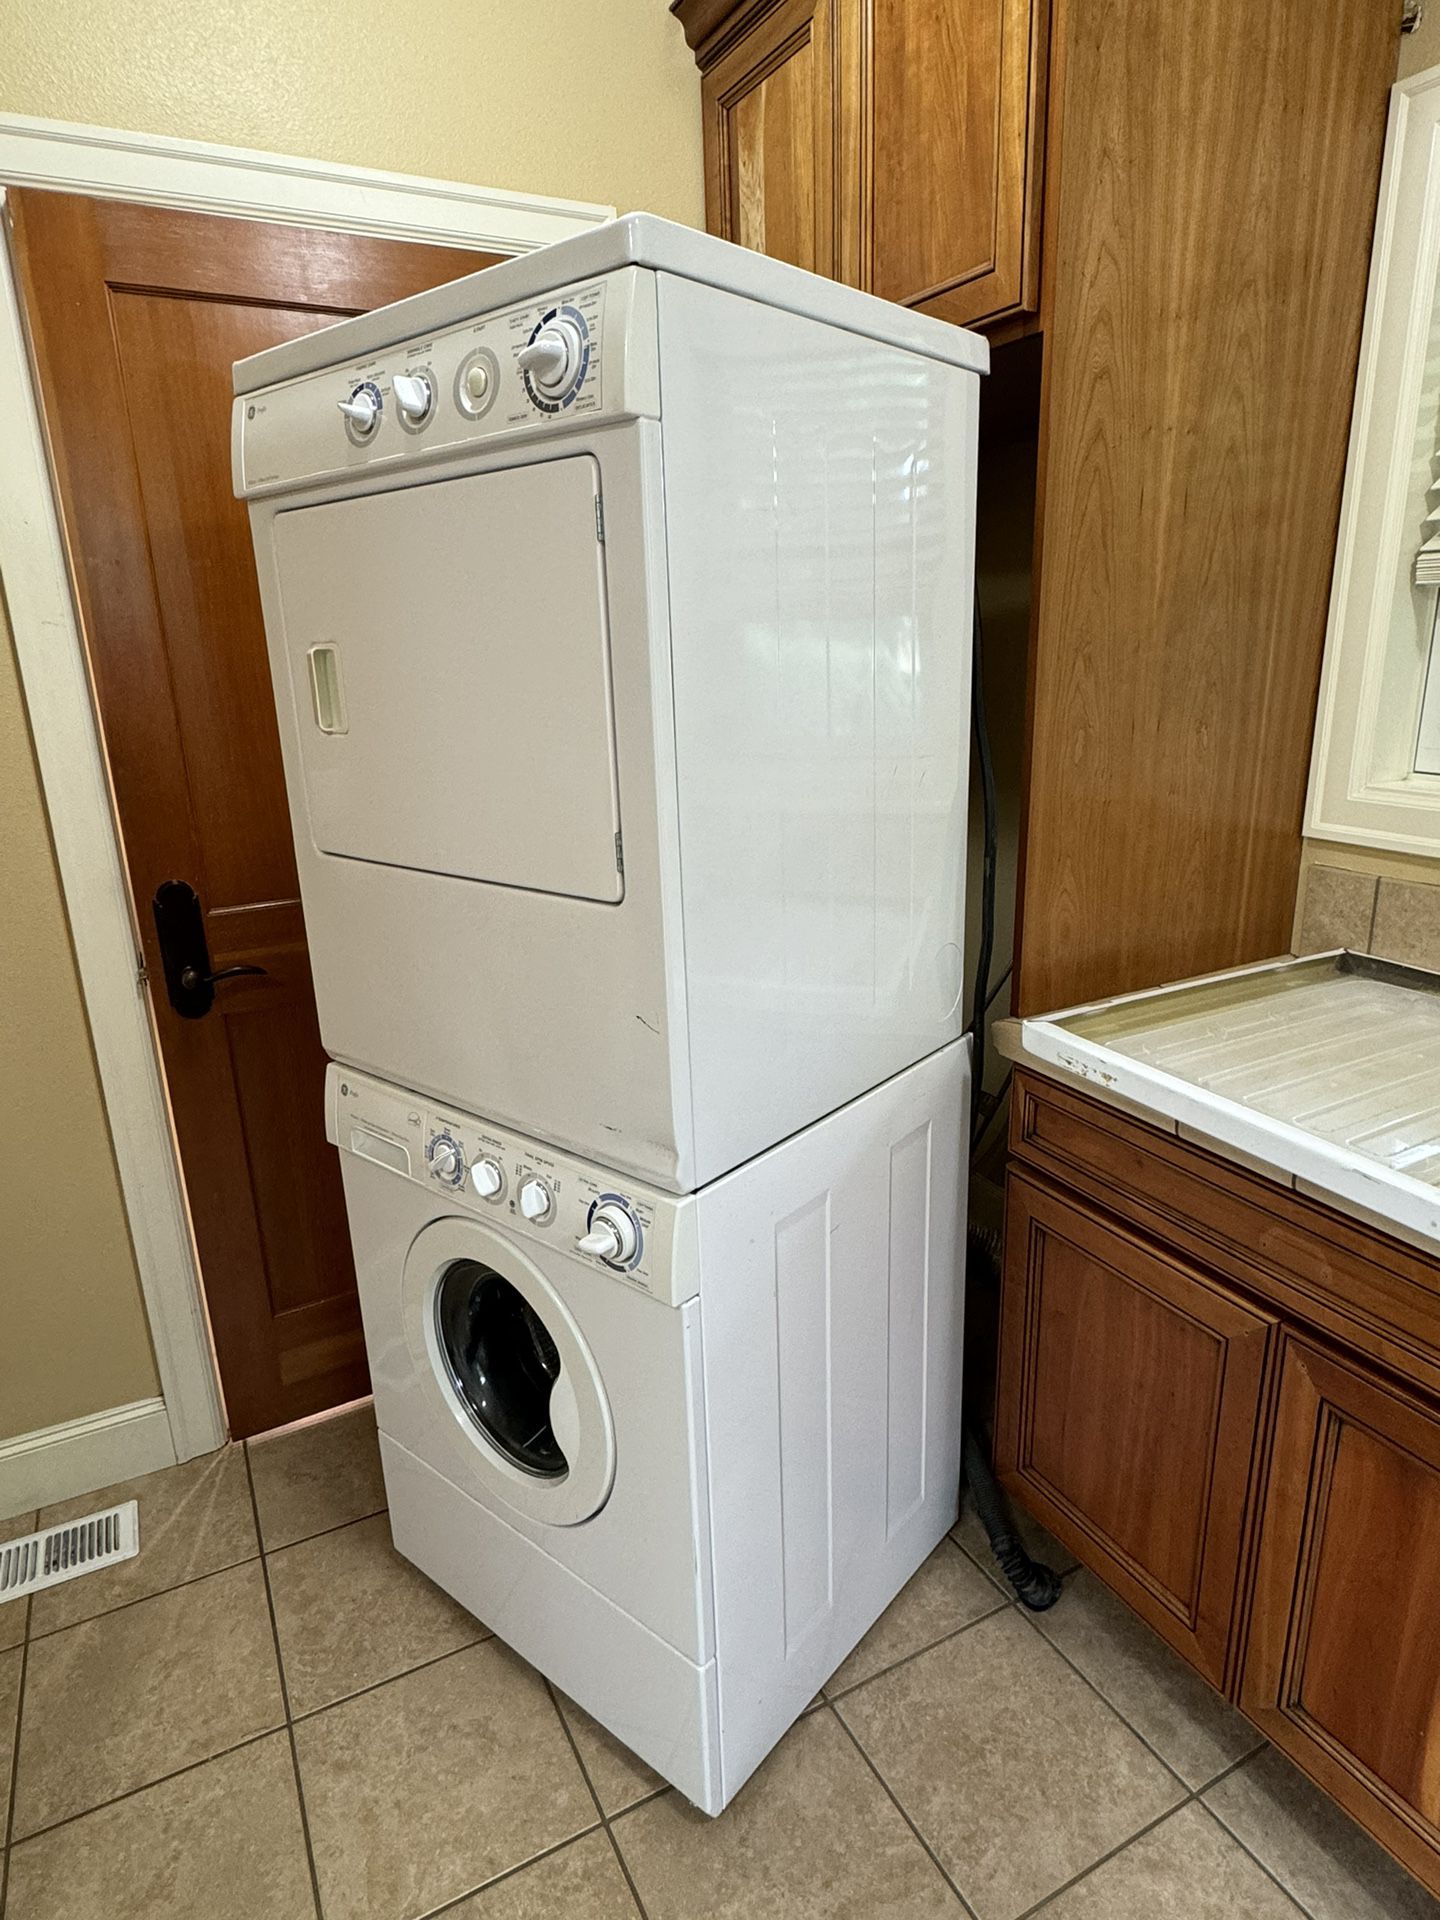 GE Profile Stackable Washer/Dryer Set